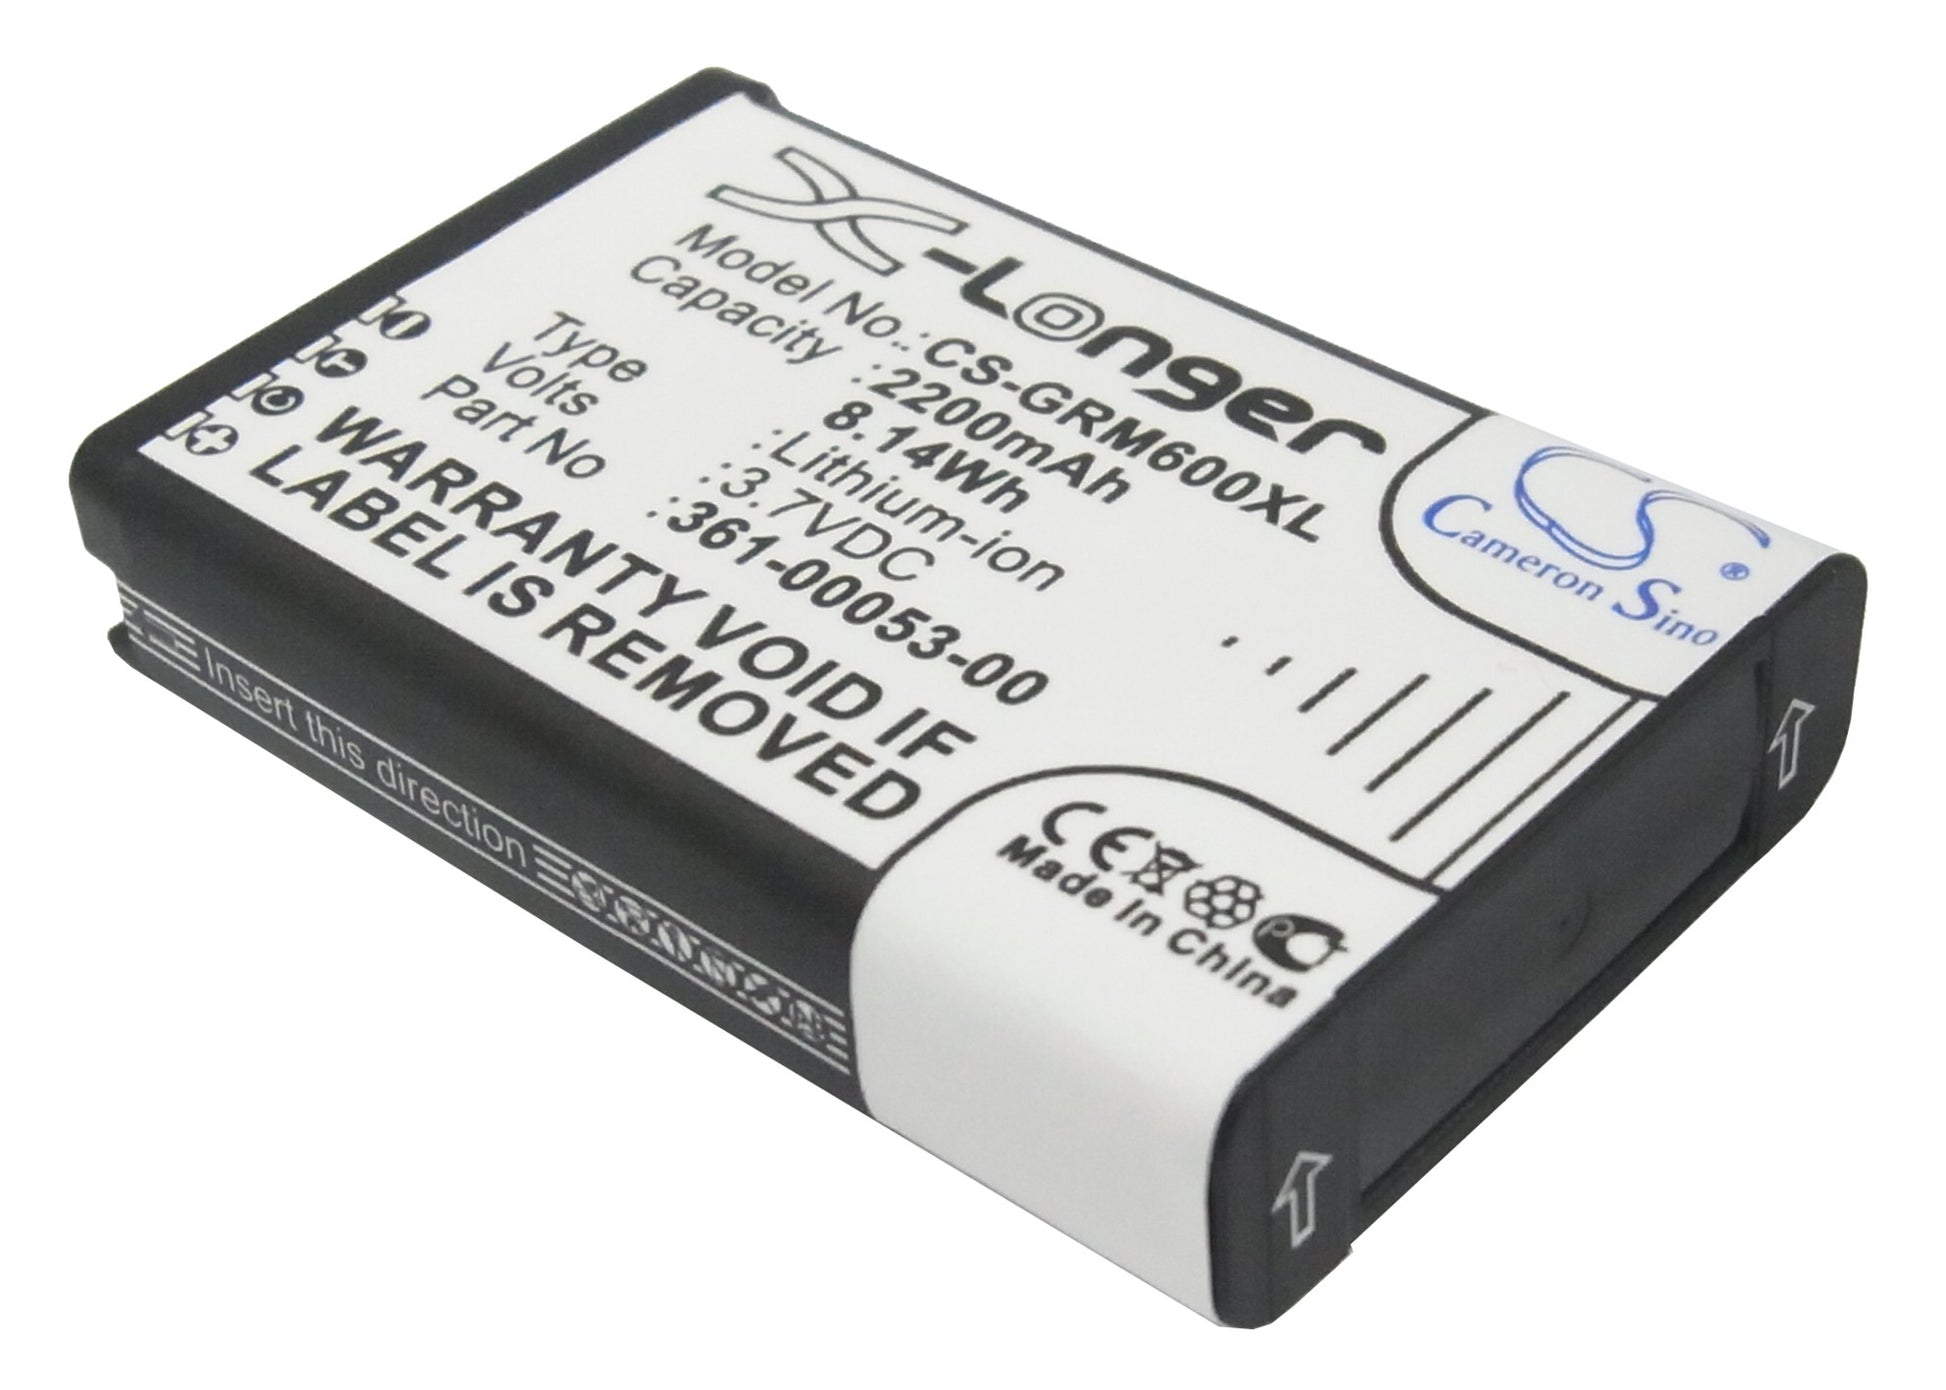 2200mAh 361-00053-00 High Capacity Battery Garmin Alpha 100 handheld-SMAVtronics